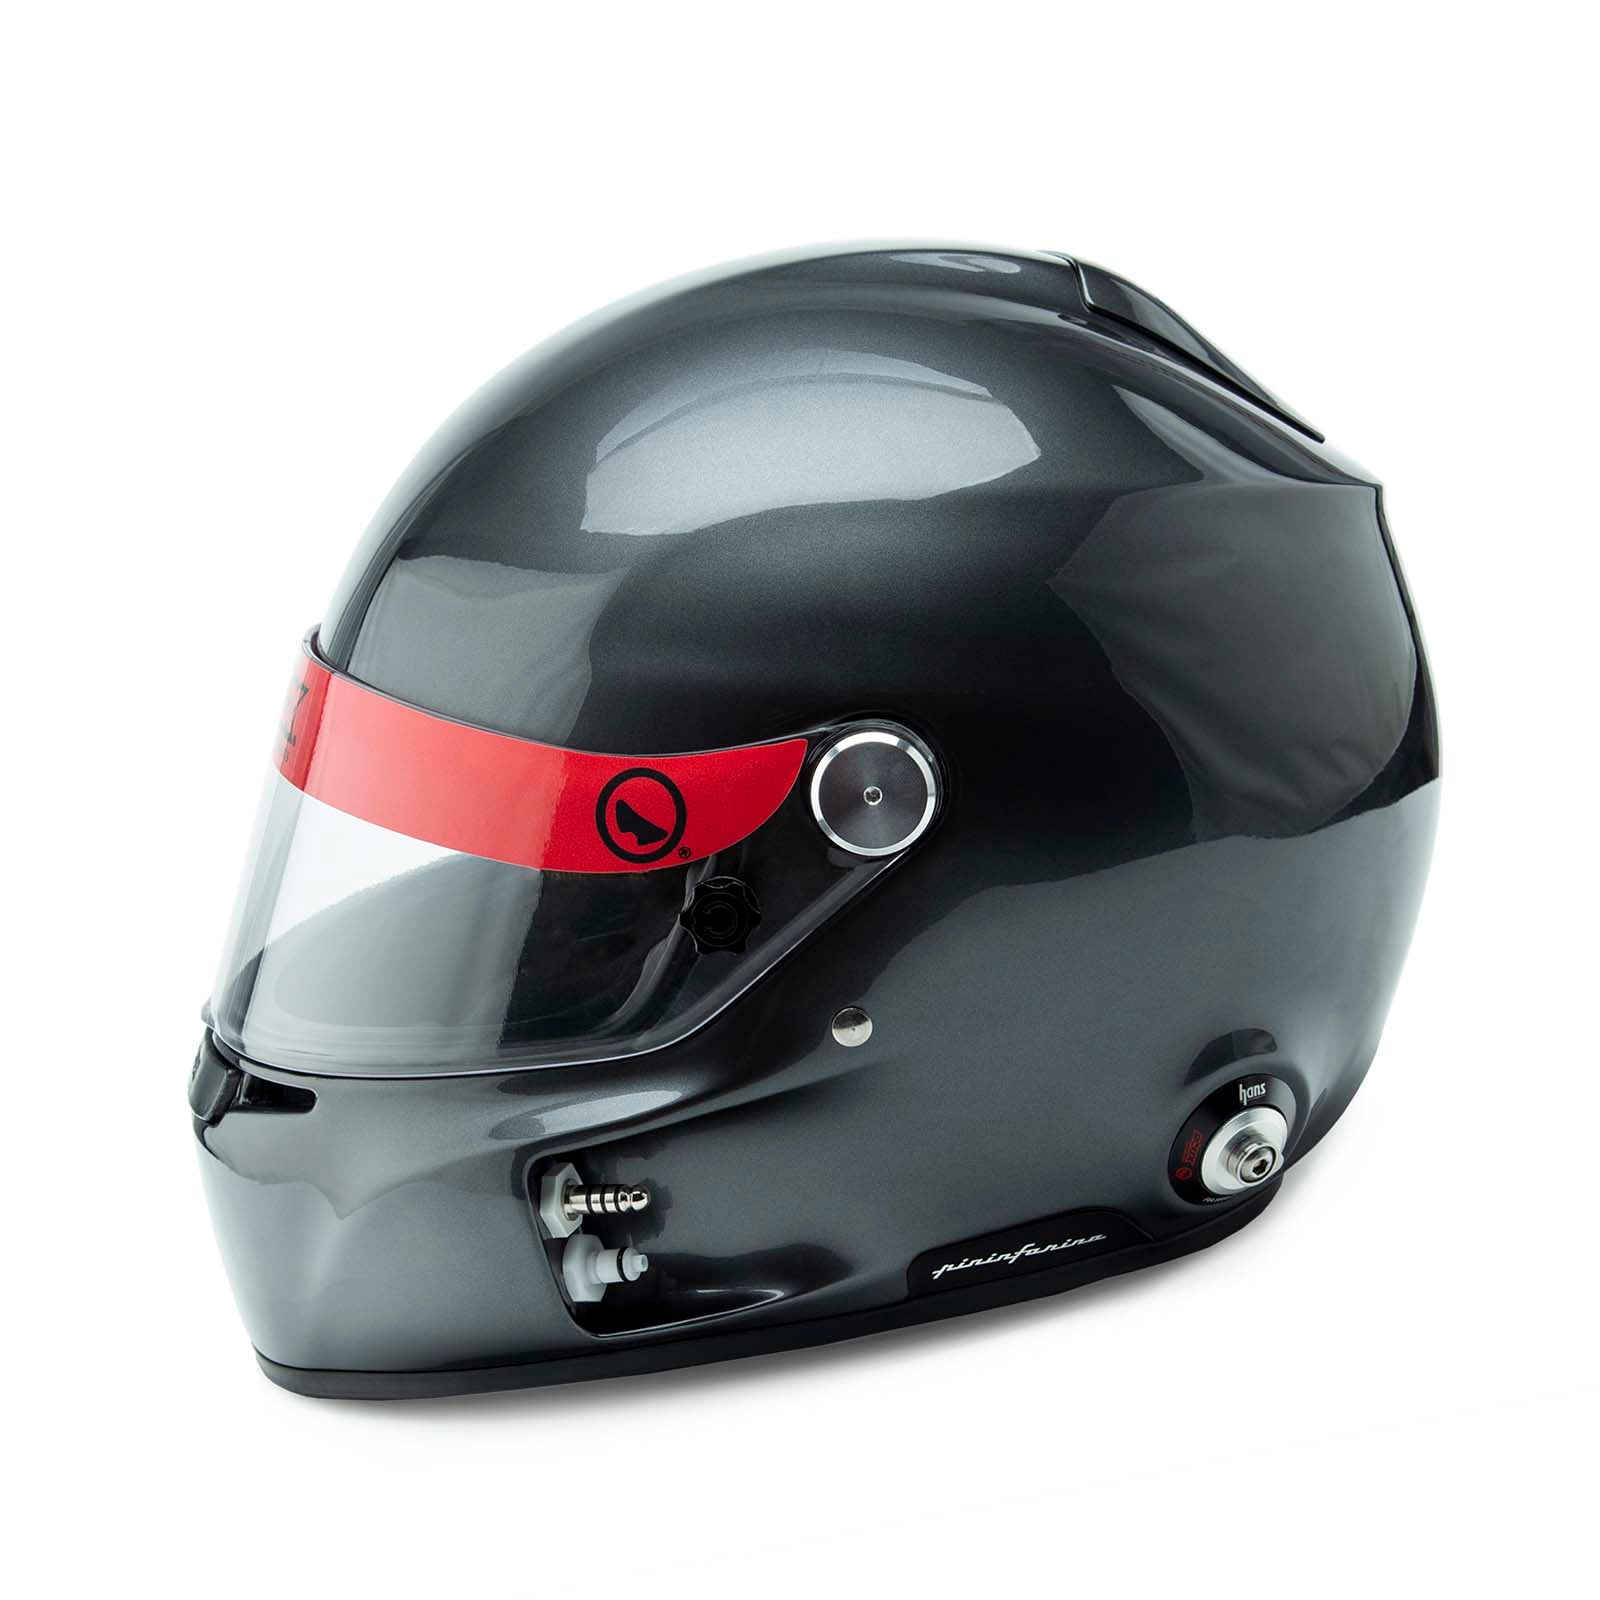 Roux Pininfarina GT Loaded SA2020 Helmet - Side